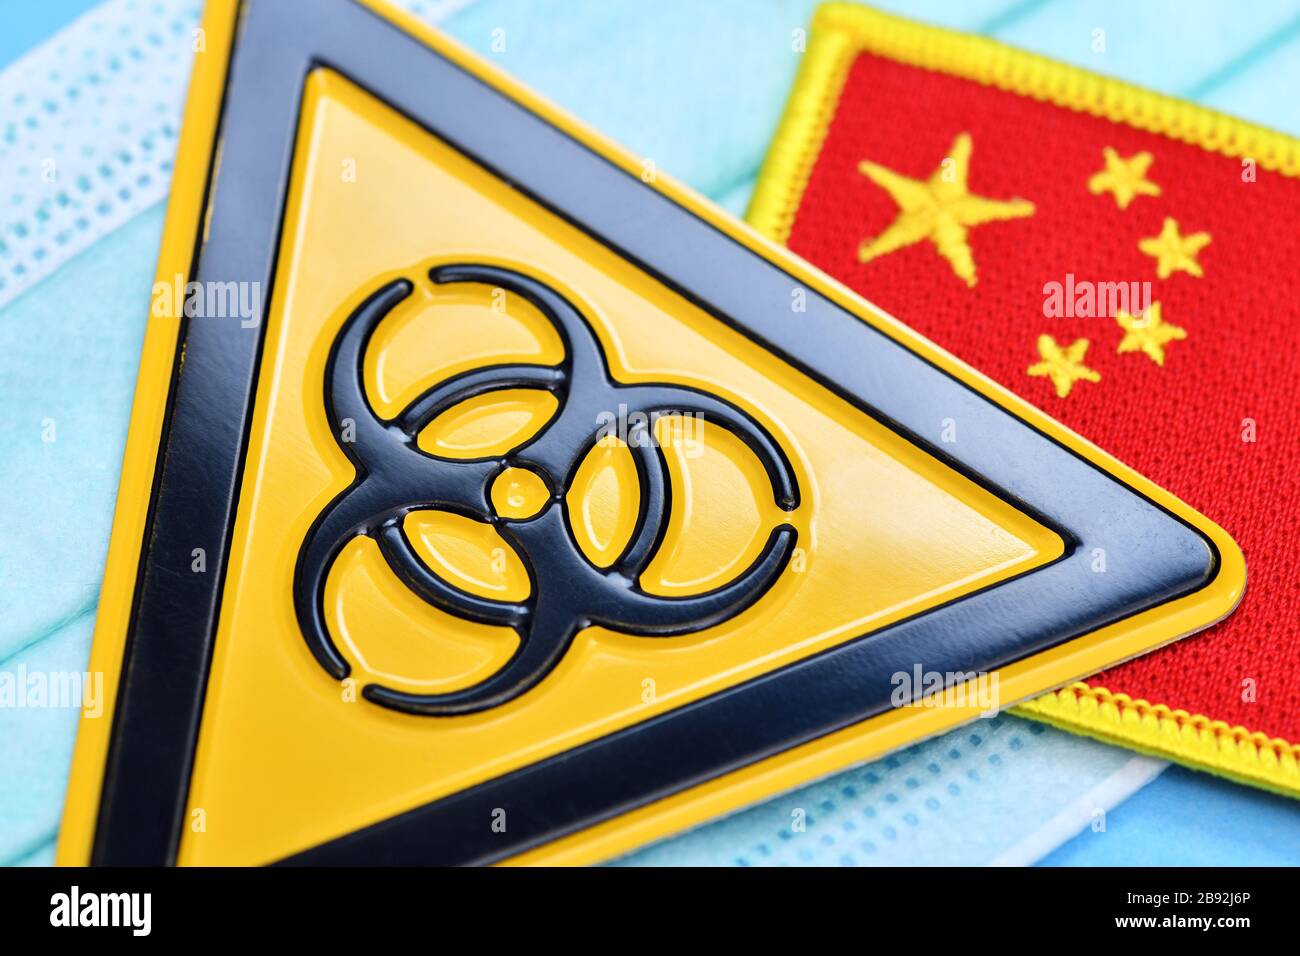 Biologie signe de danger et drapeau de la Chine sur un masque, photo symbolique Coronavirus, Biogefährdungsschild und Fahne von China auf einem Mundschutz, Symbolfoto Banque D'Images